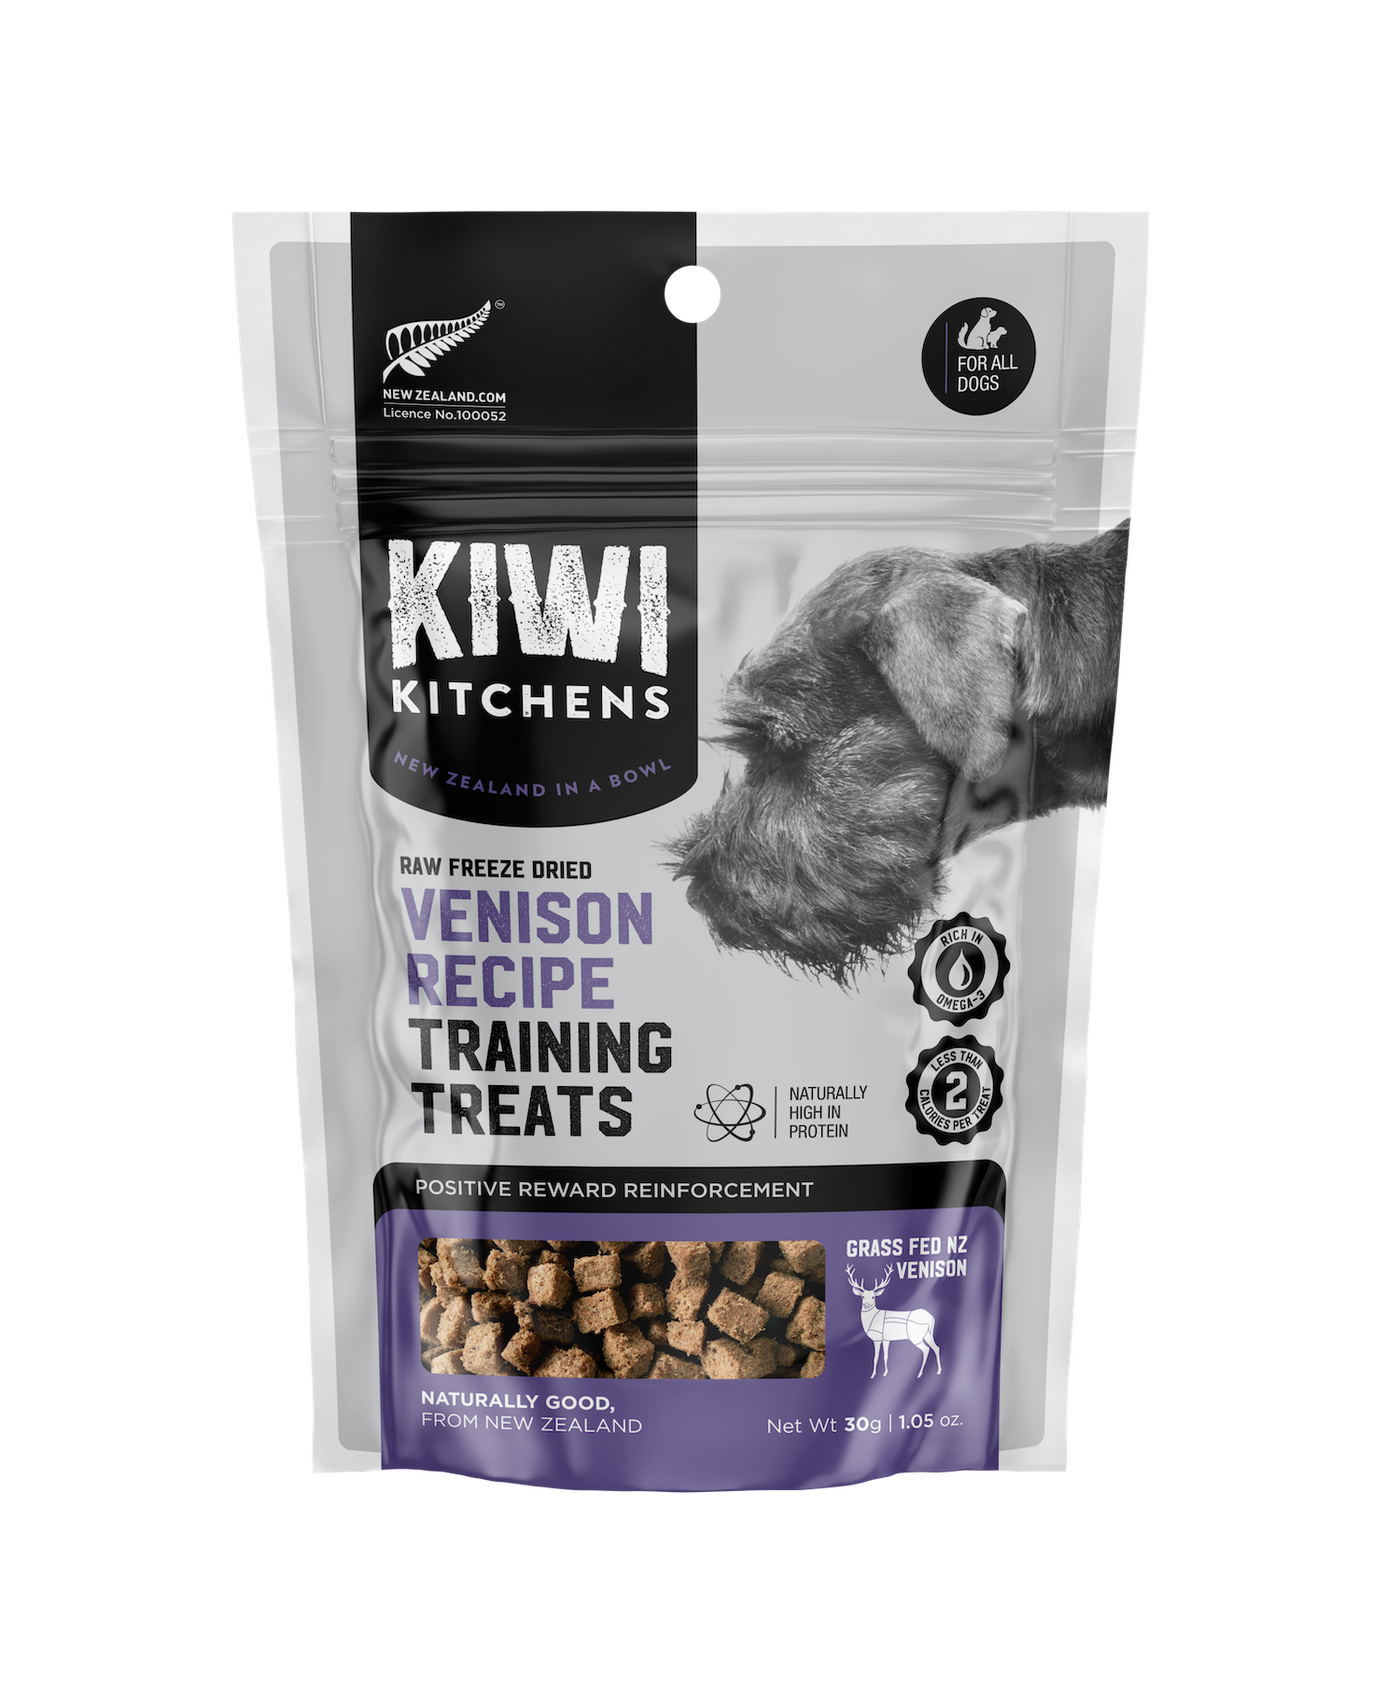 Kiwi Kitchens Raw Freeze Dried Dog Training Treats - Venison Recipe